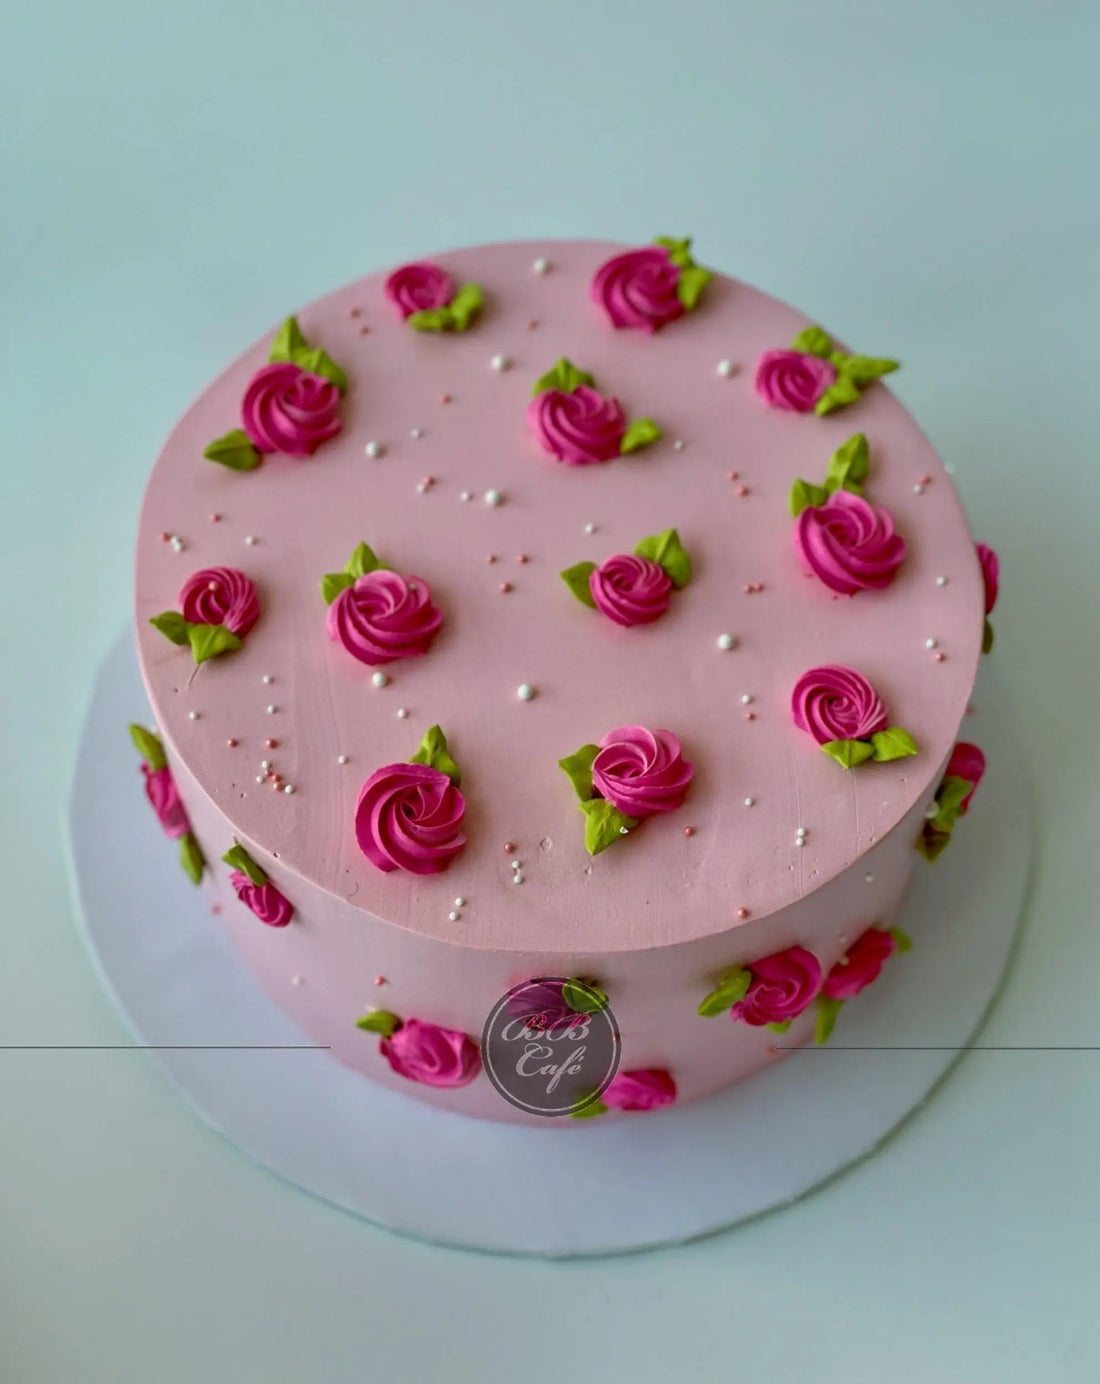 Hand piped mini rosettes on whipped cream - custom cake